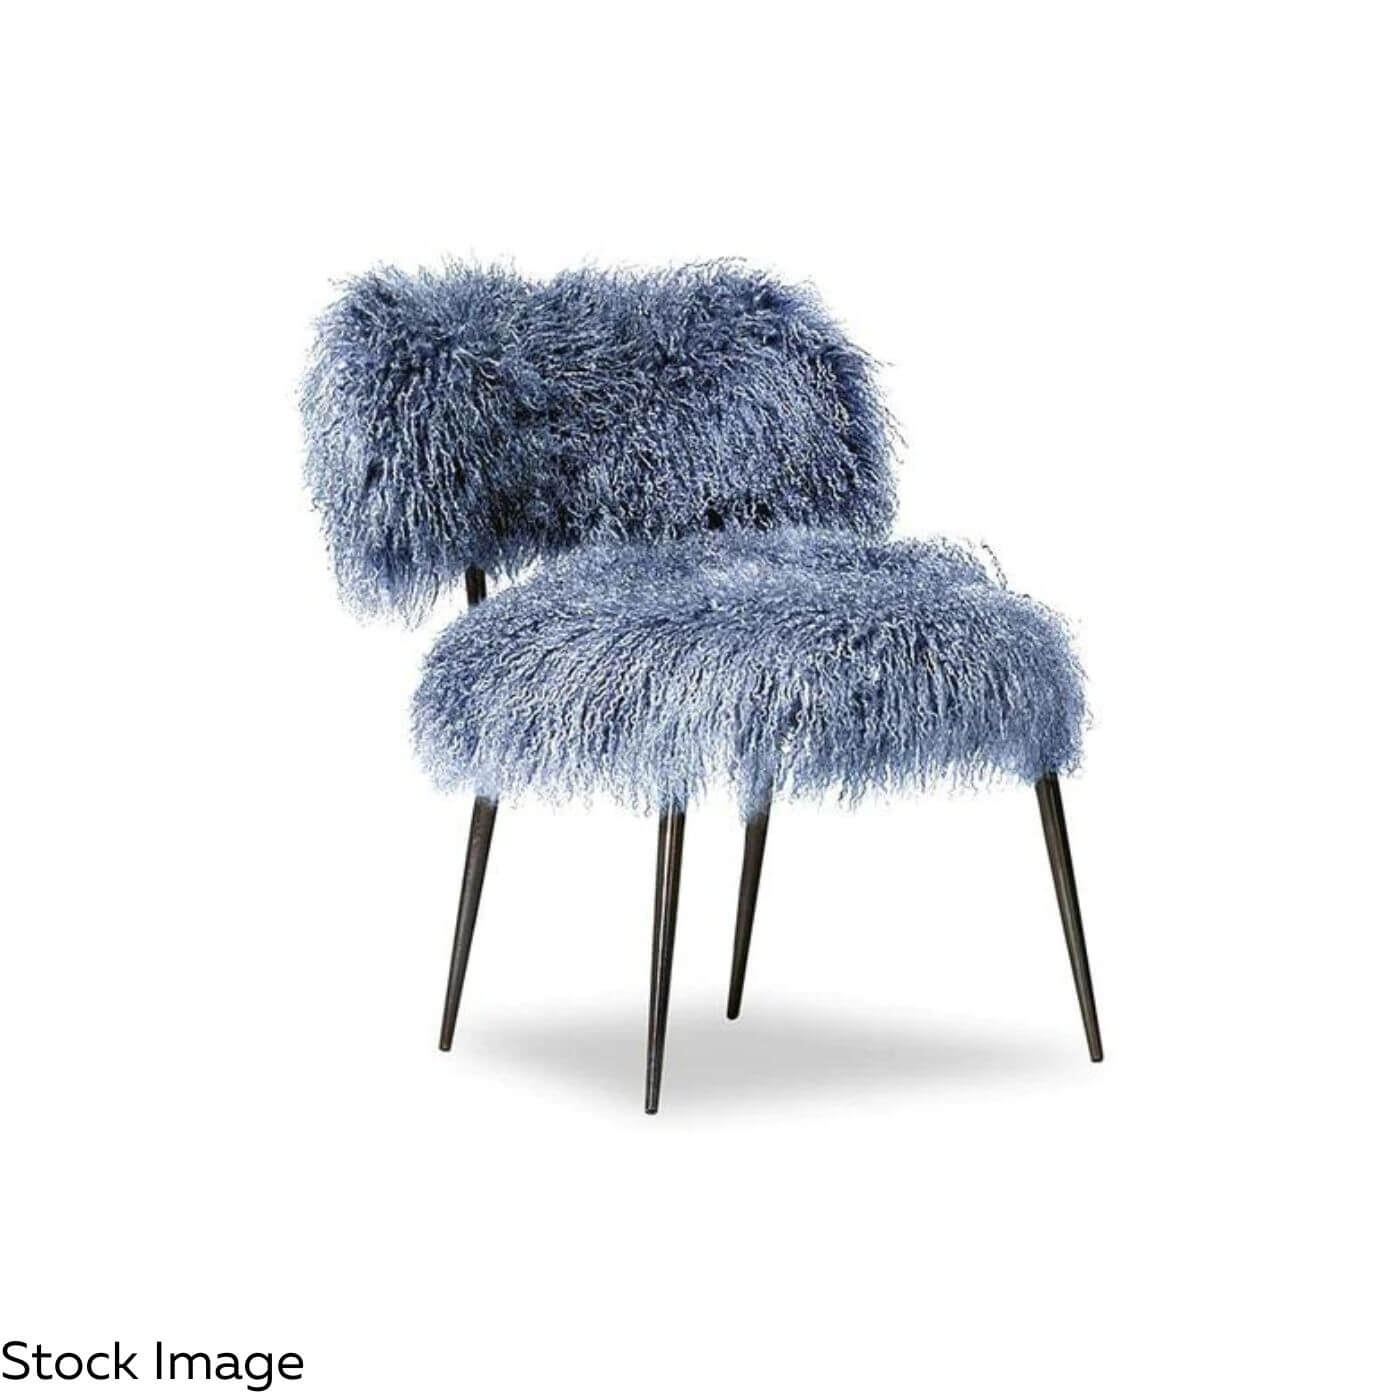 Two-Design-Lovers-Baxter-Nepal-Little-Chair-Mongolian-Blue